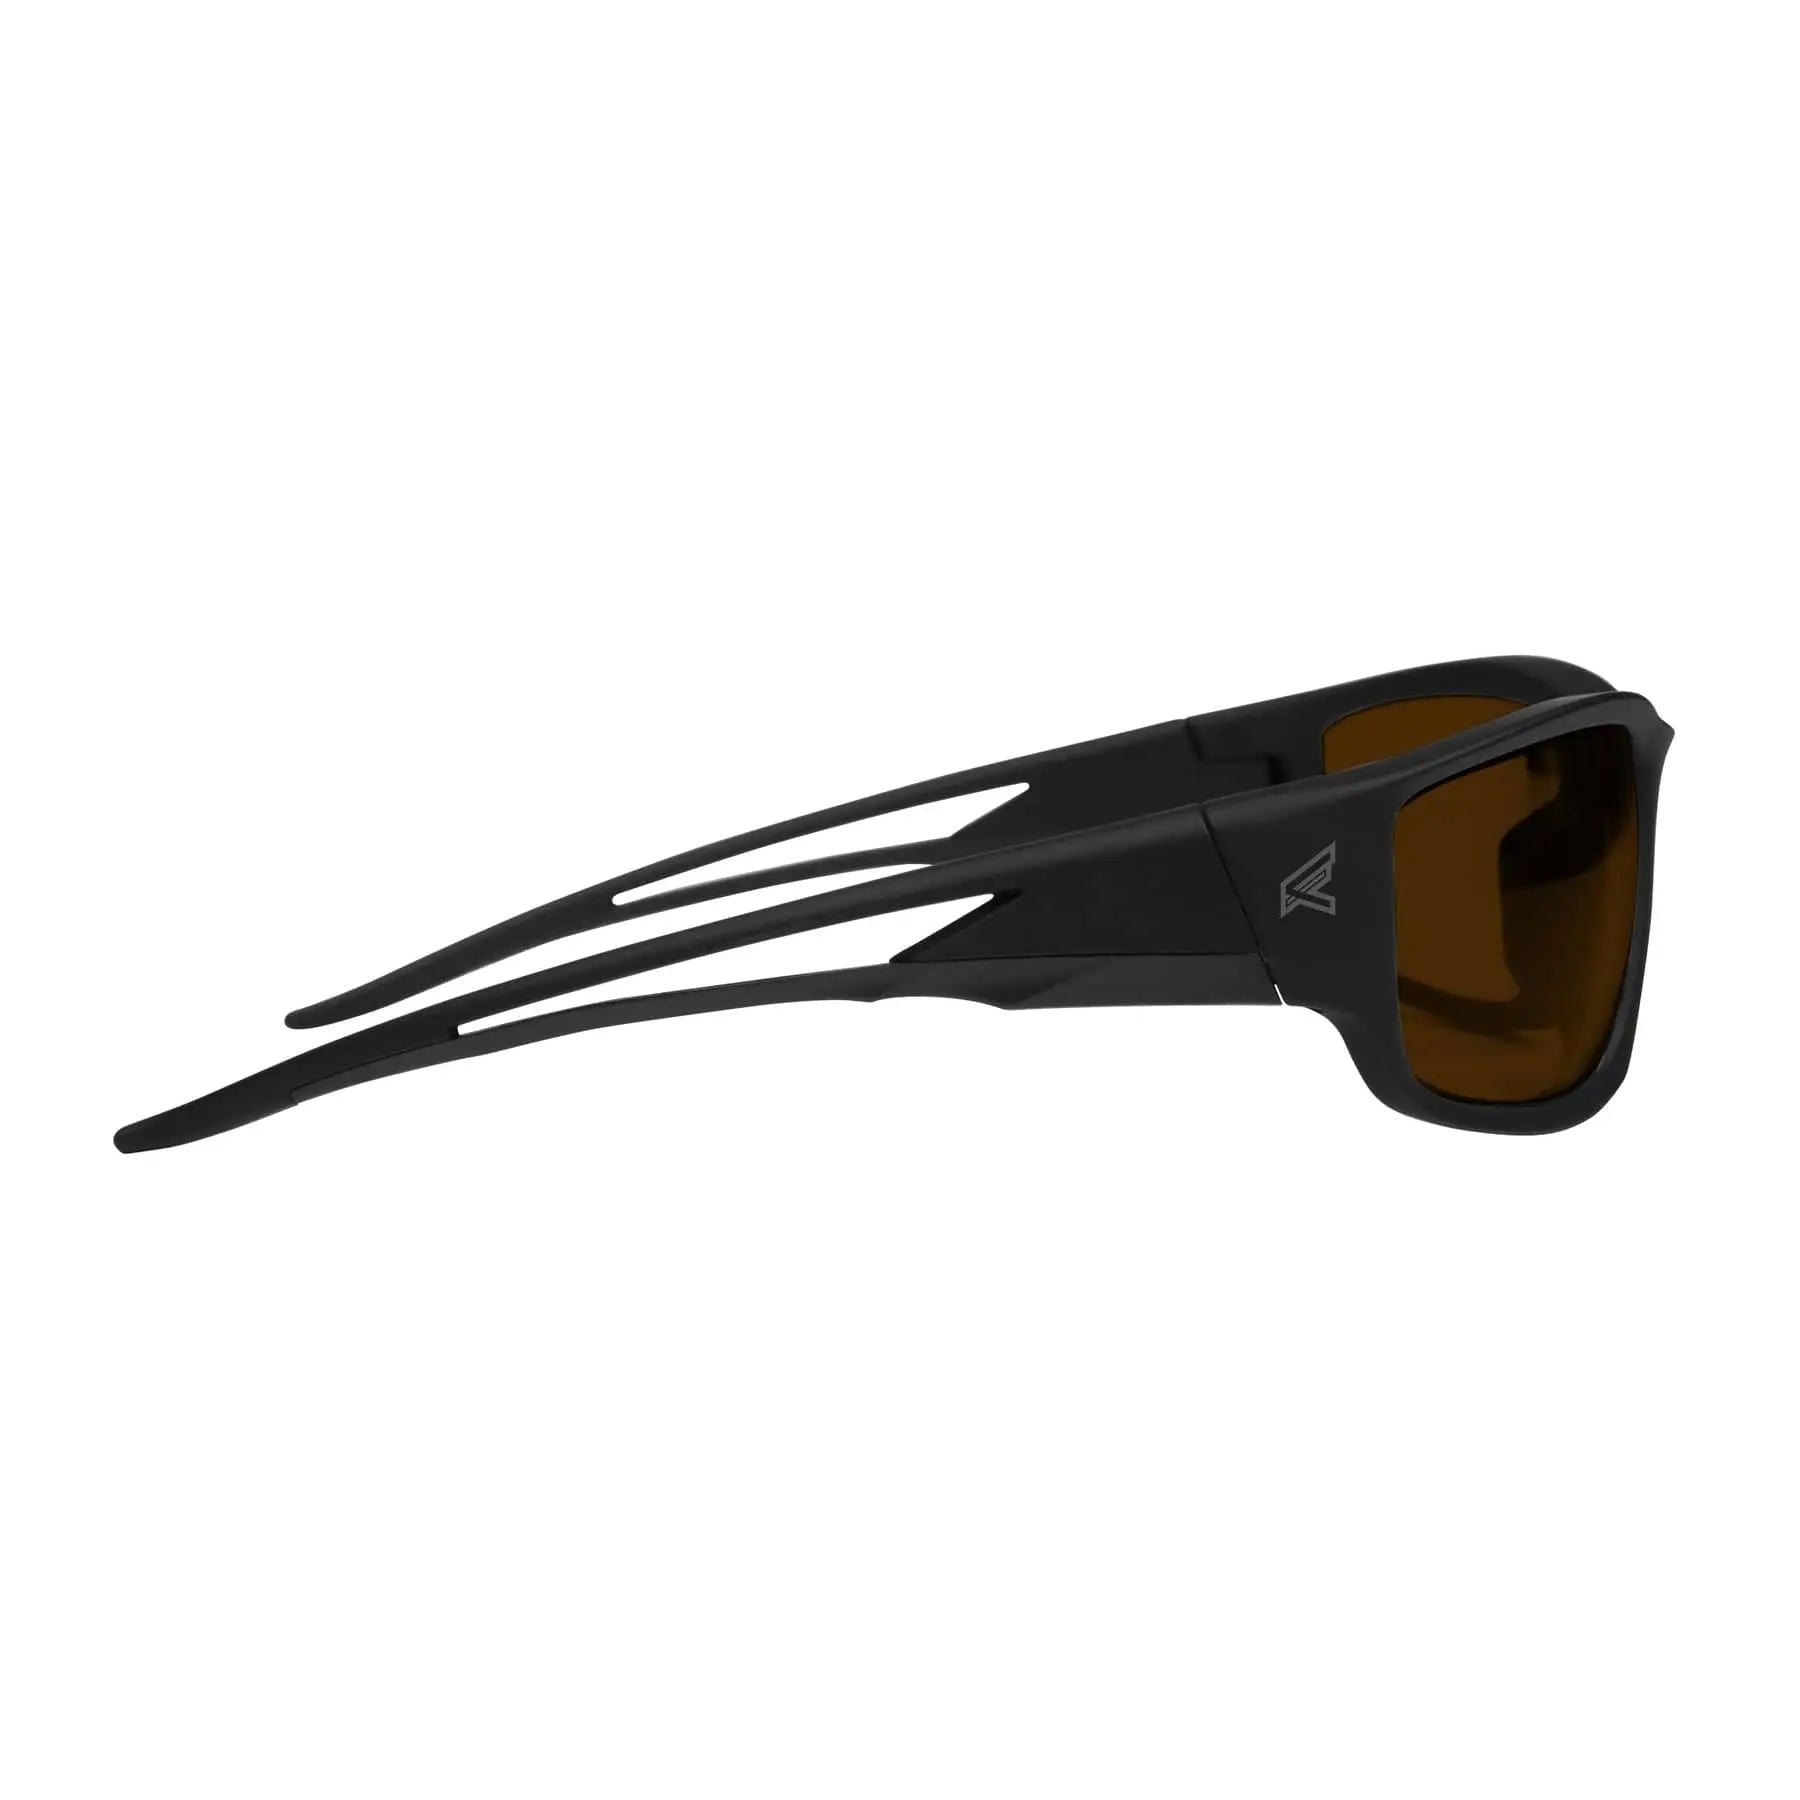 EDGE - Kazbeck Polarized Safety Glasses, Black/Copper - Becker Safety and Supply